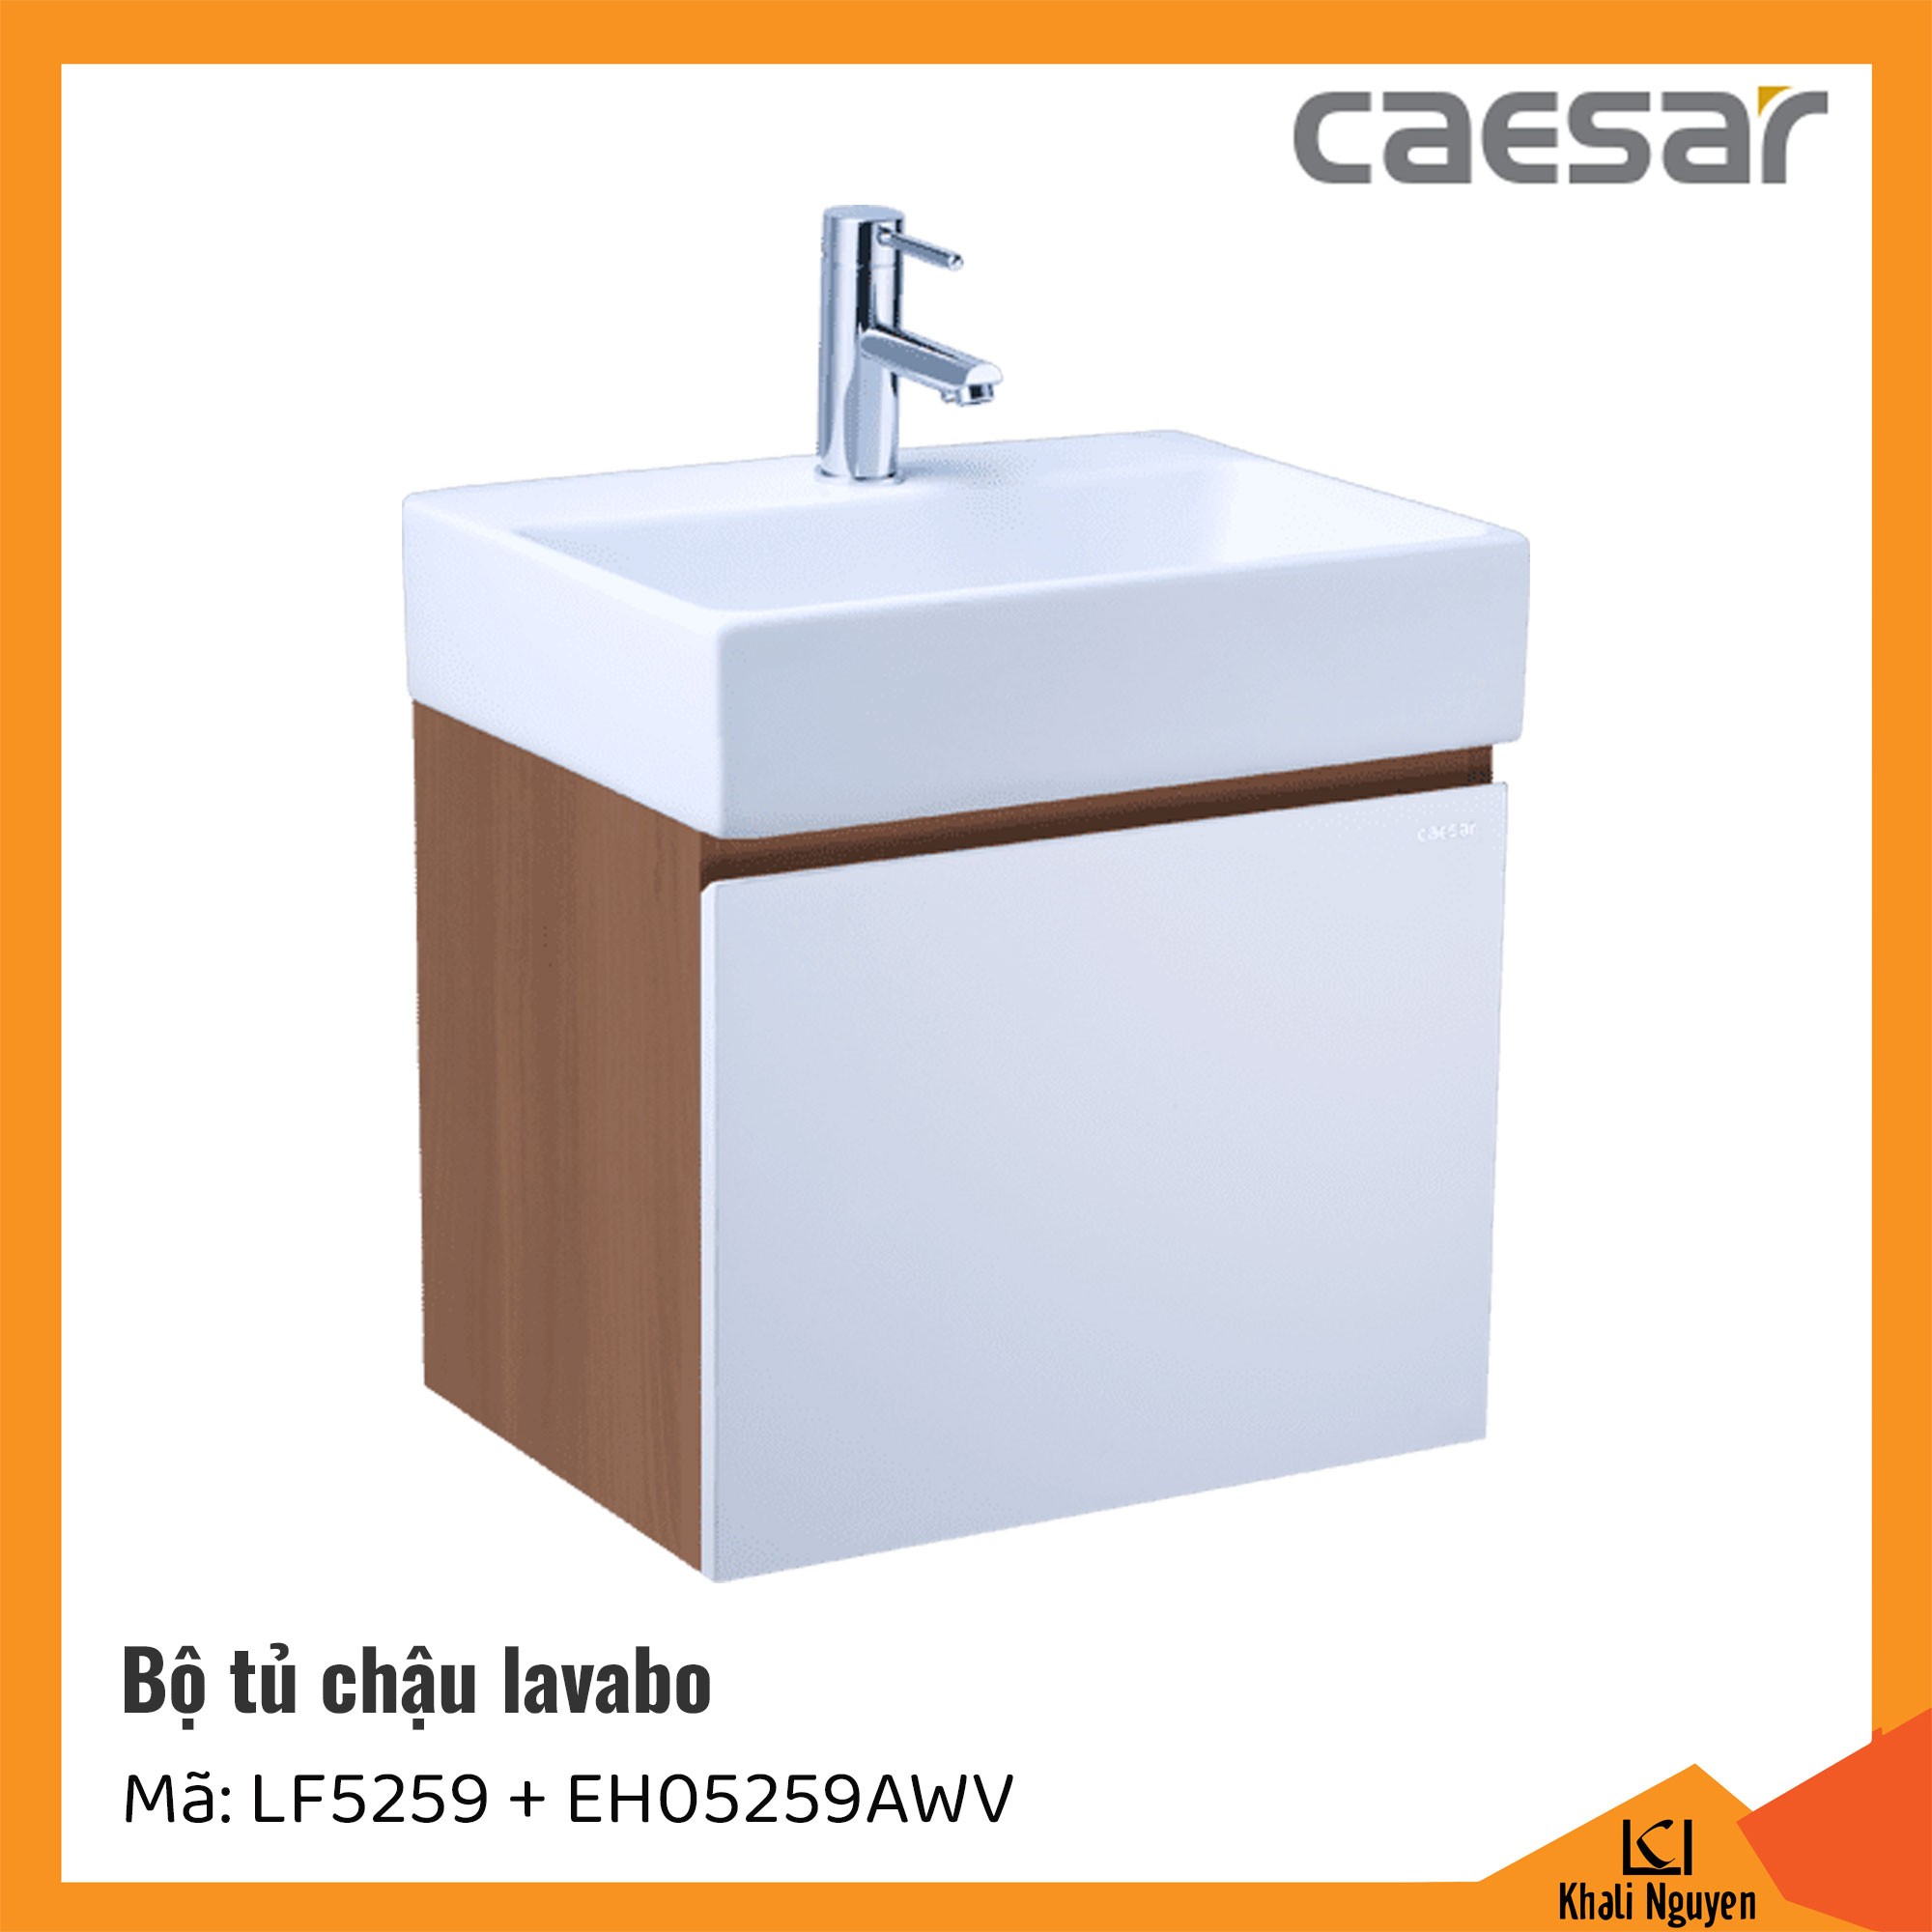 Bộ tủ chậu lavabo Caesar LF5259+EH05259AWV